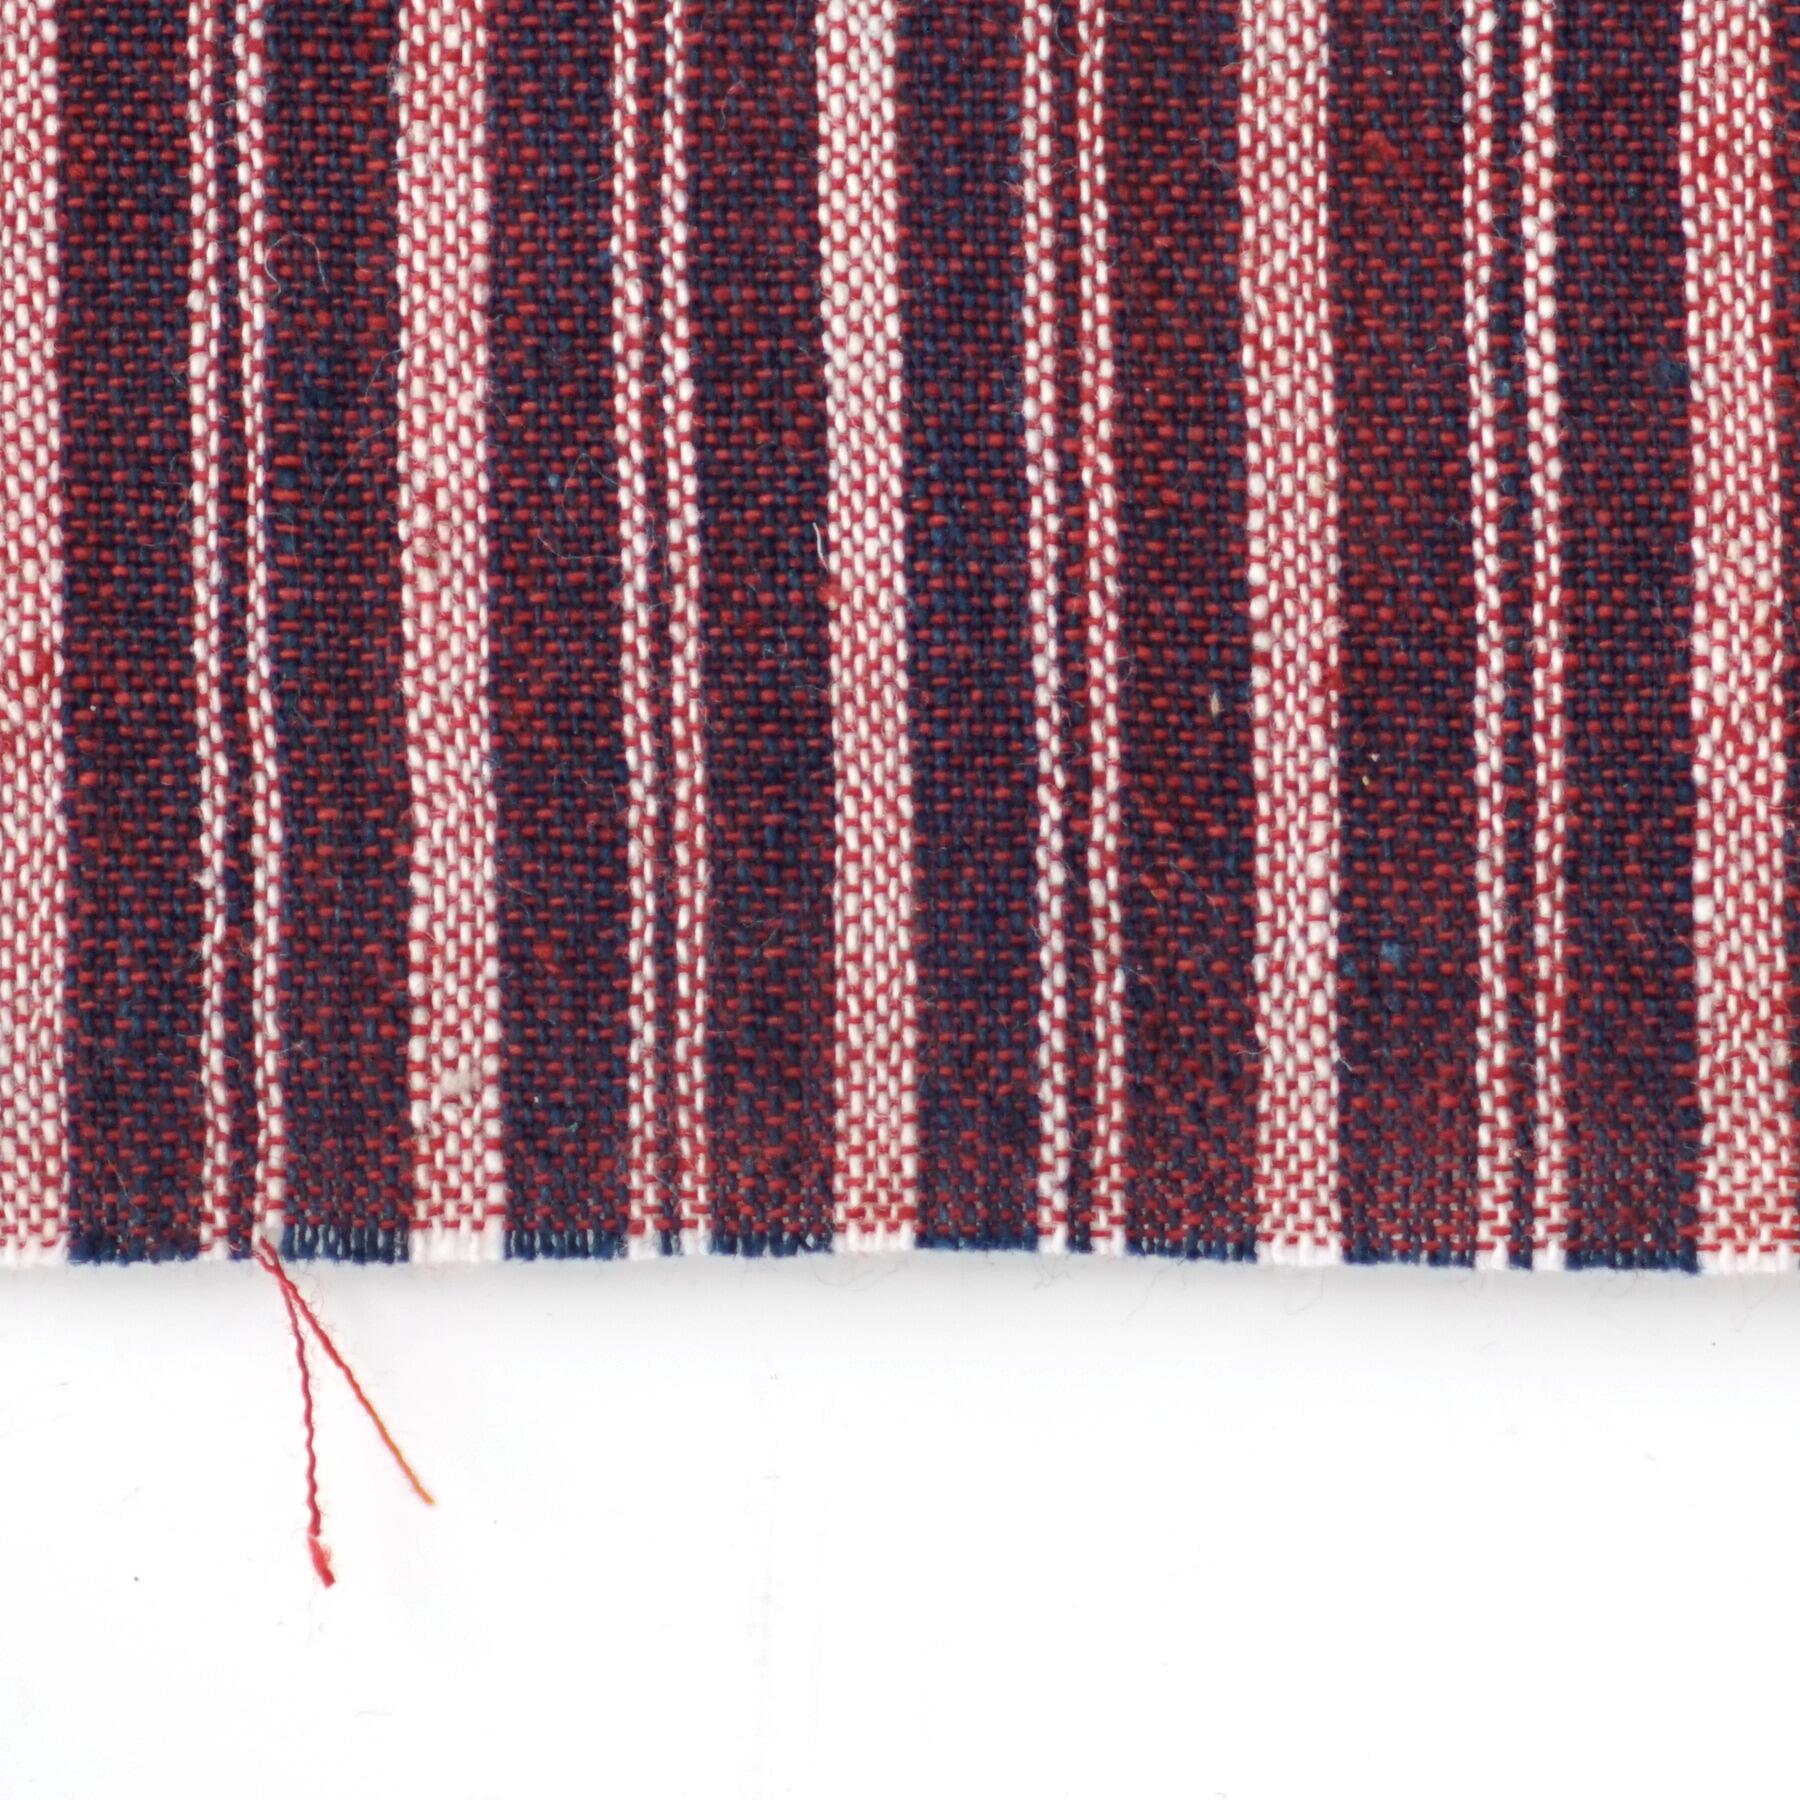 100 % Handloom Woven Cotton - Cross Colour - Pomegranate Yellow Warp, Red Alizarin Weft - Close Up